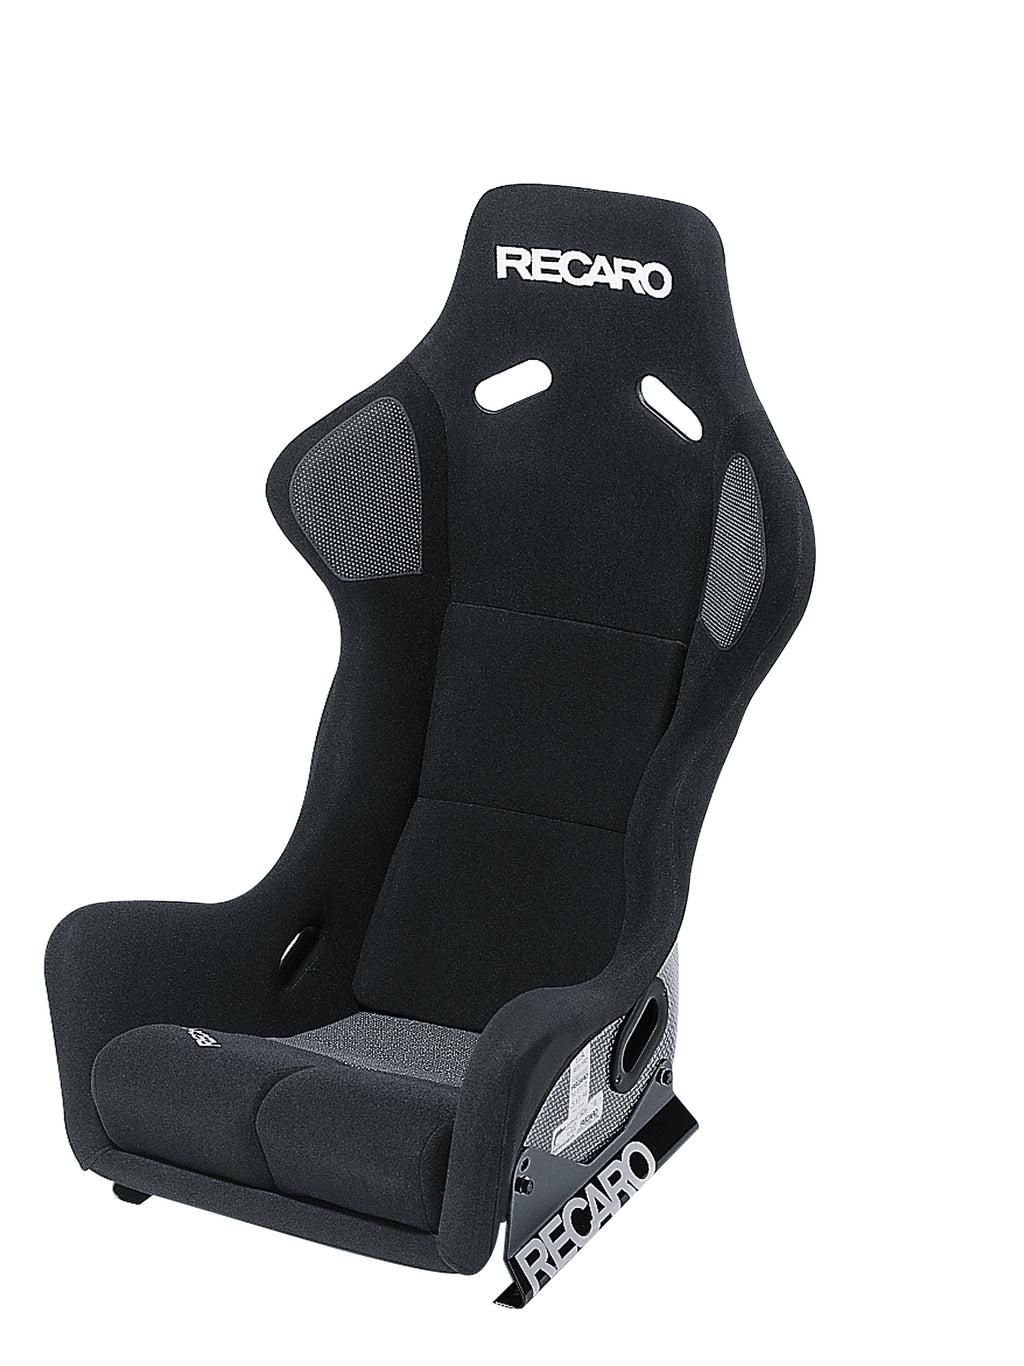 Recaro - Profi SPG Seat